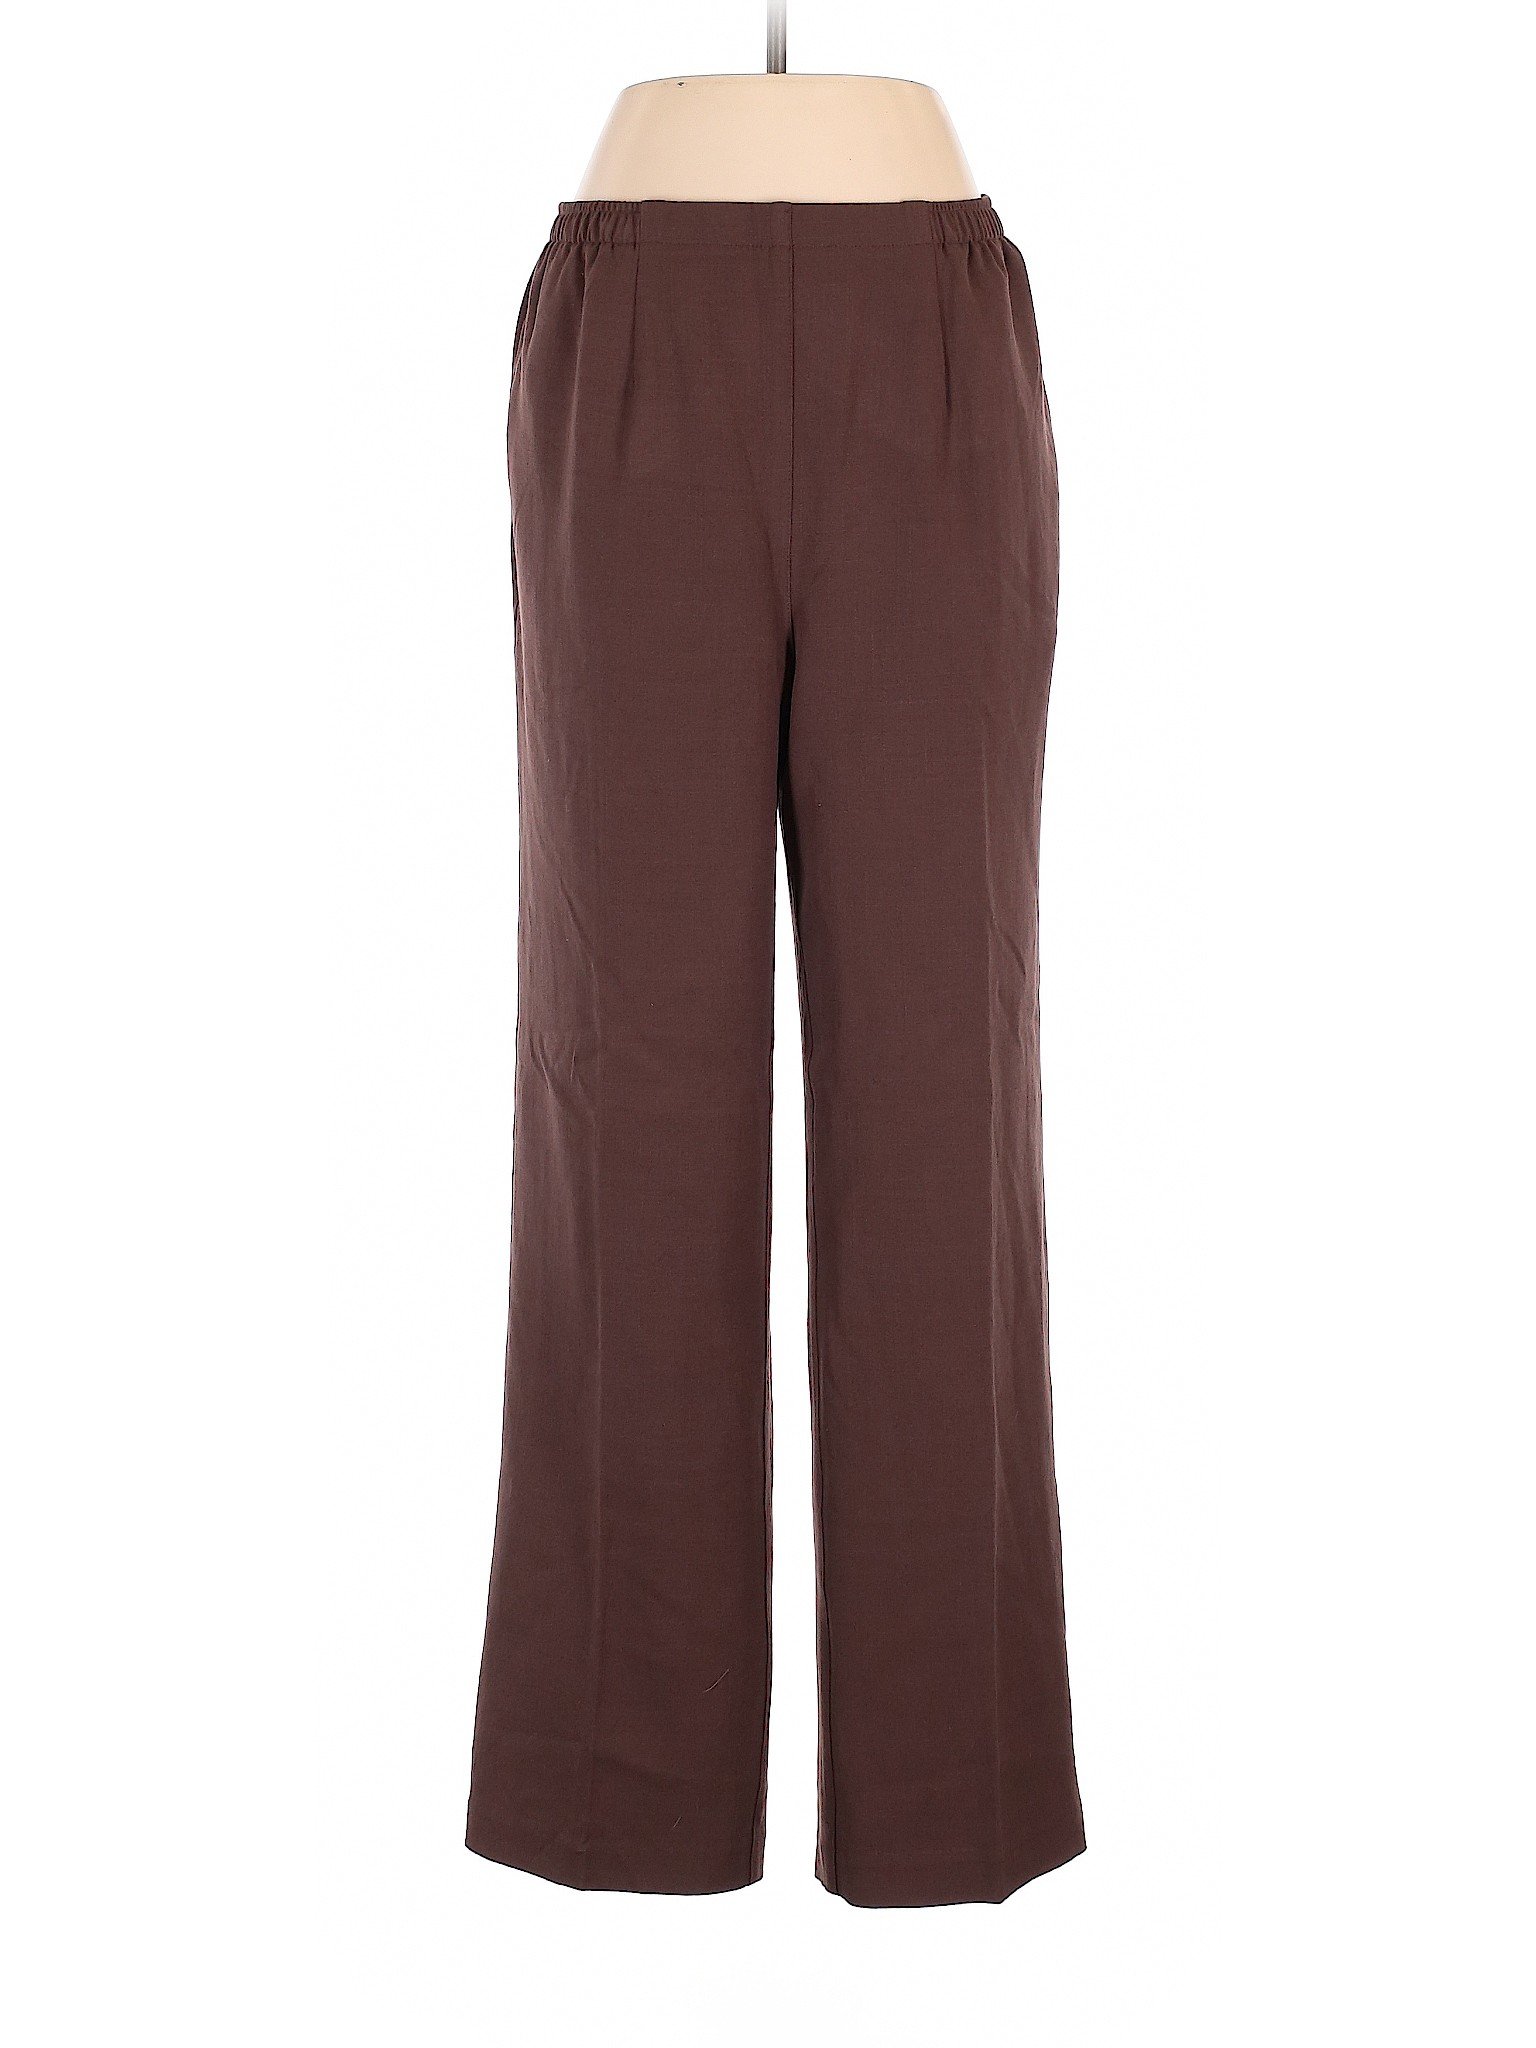 Norm Thompson Women Brown Casual Pants M | eBay